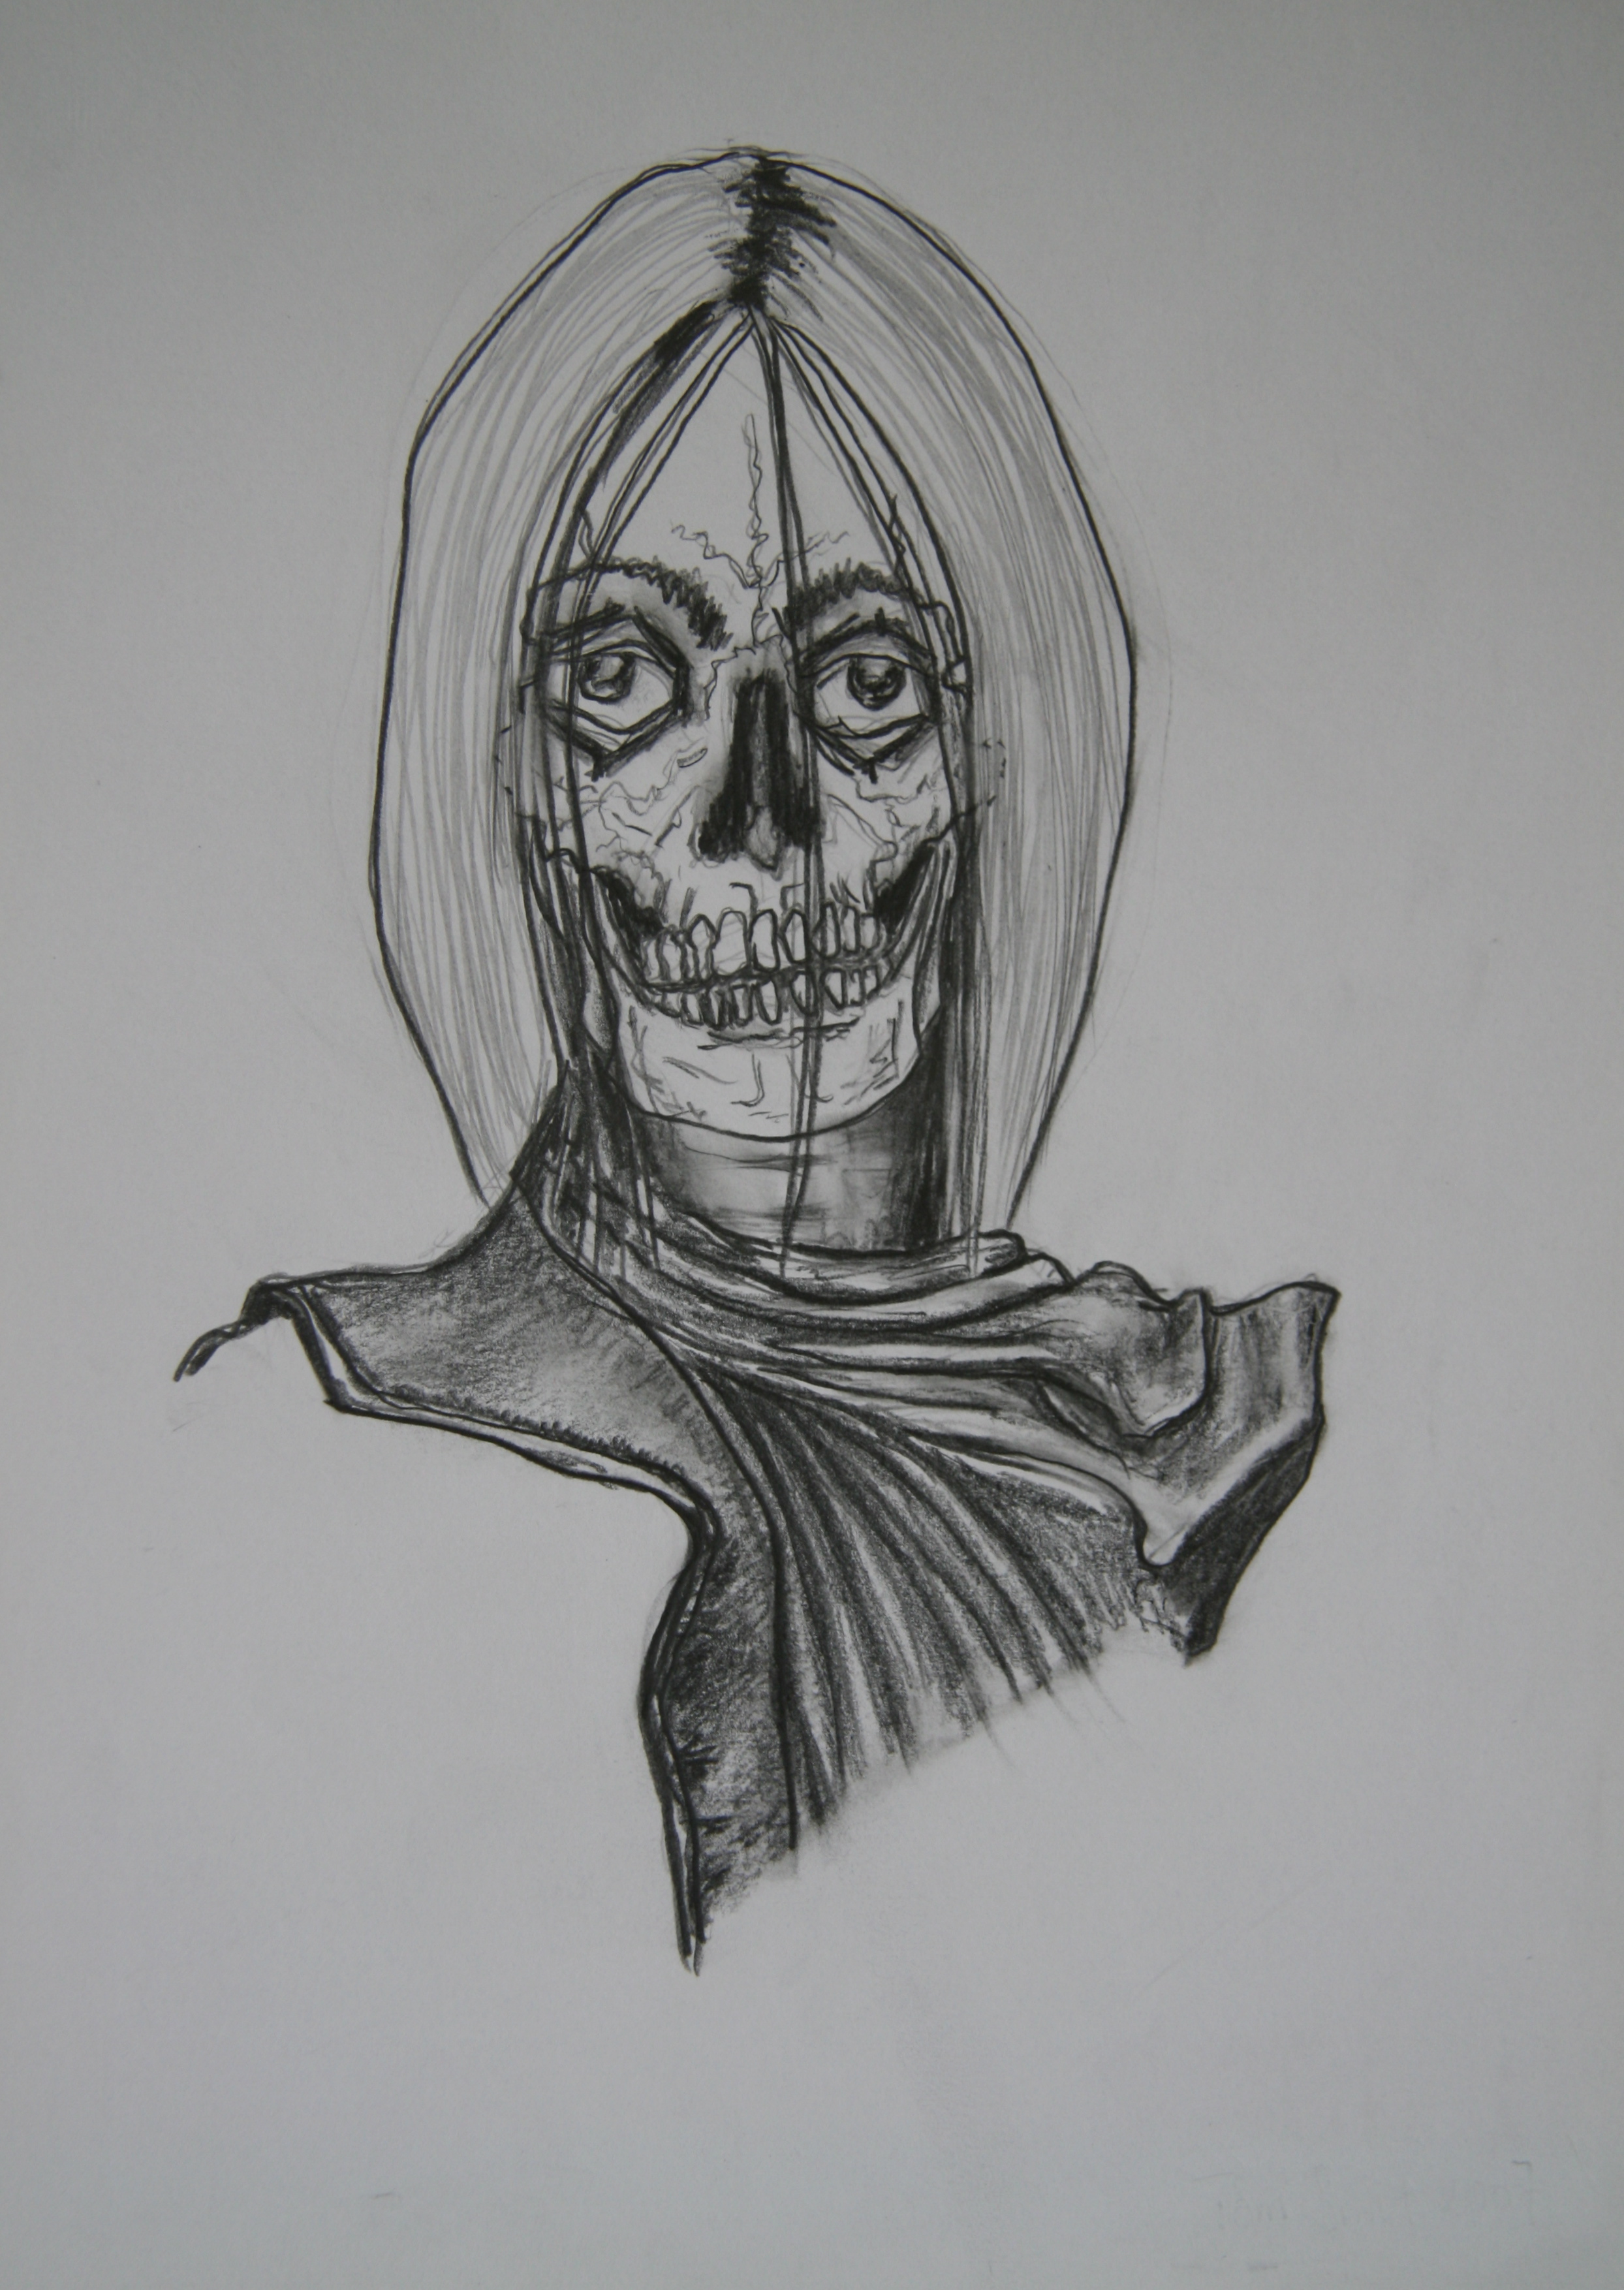 Skull 7, 30x21cm, pencil on paper